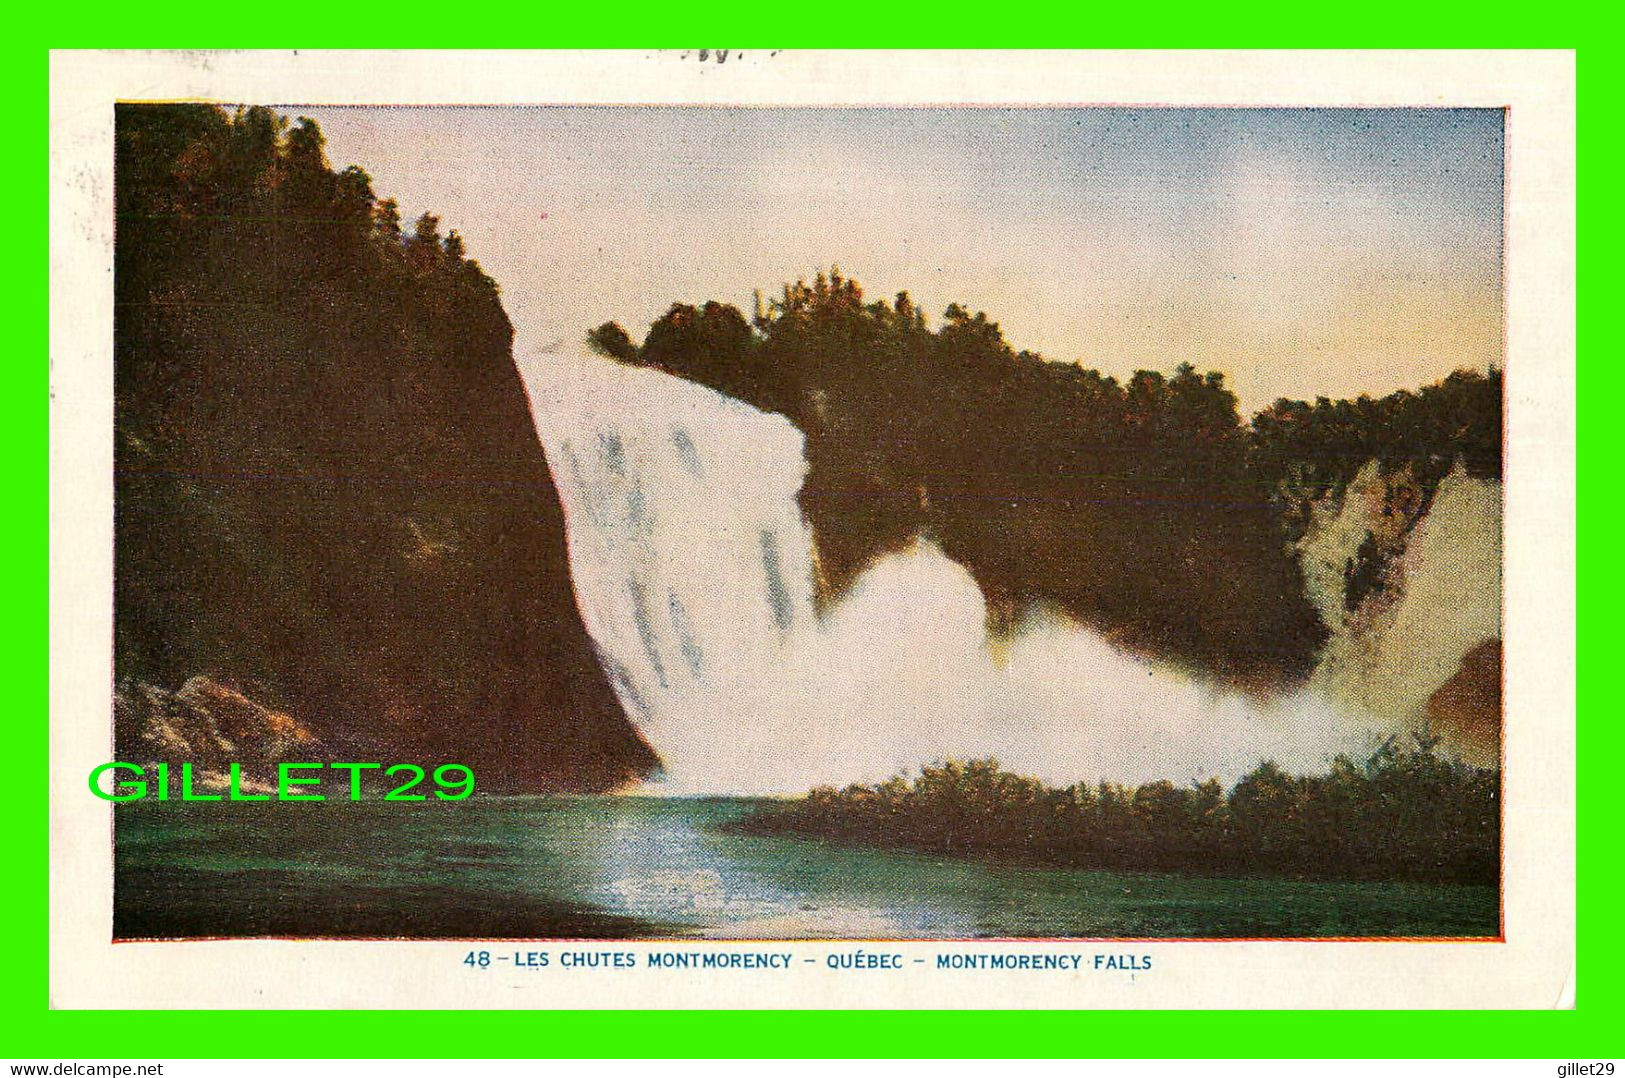 LES CHUTES MONTMORENCY, QUÉBEC - LORENZO AUDET ENR. ÉDITEUR No 48 - MONTMORENCY FALLS - CIRCULÉE EN 1956 - - Montmorency Falls